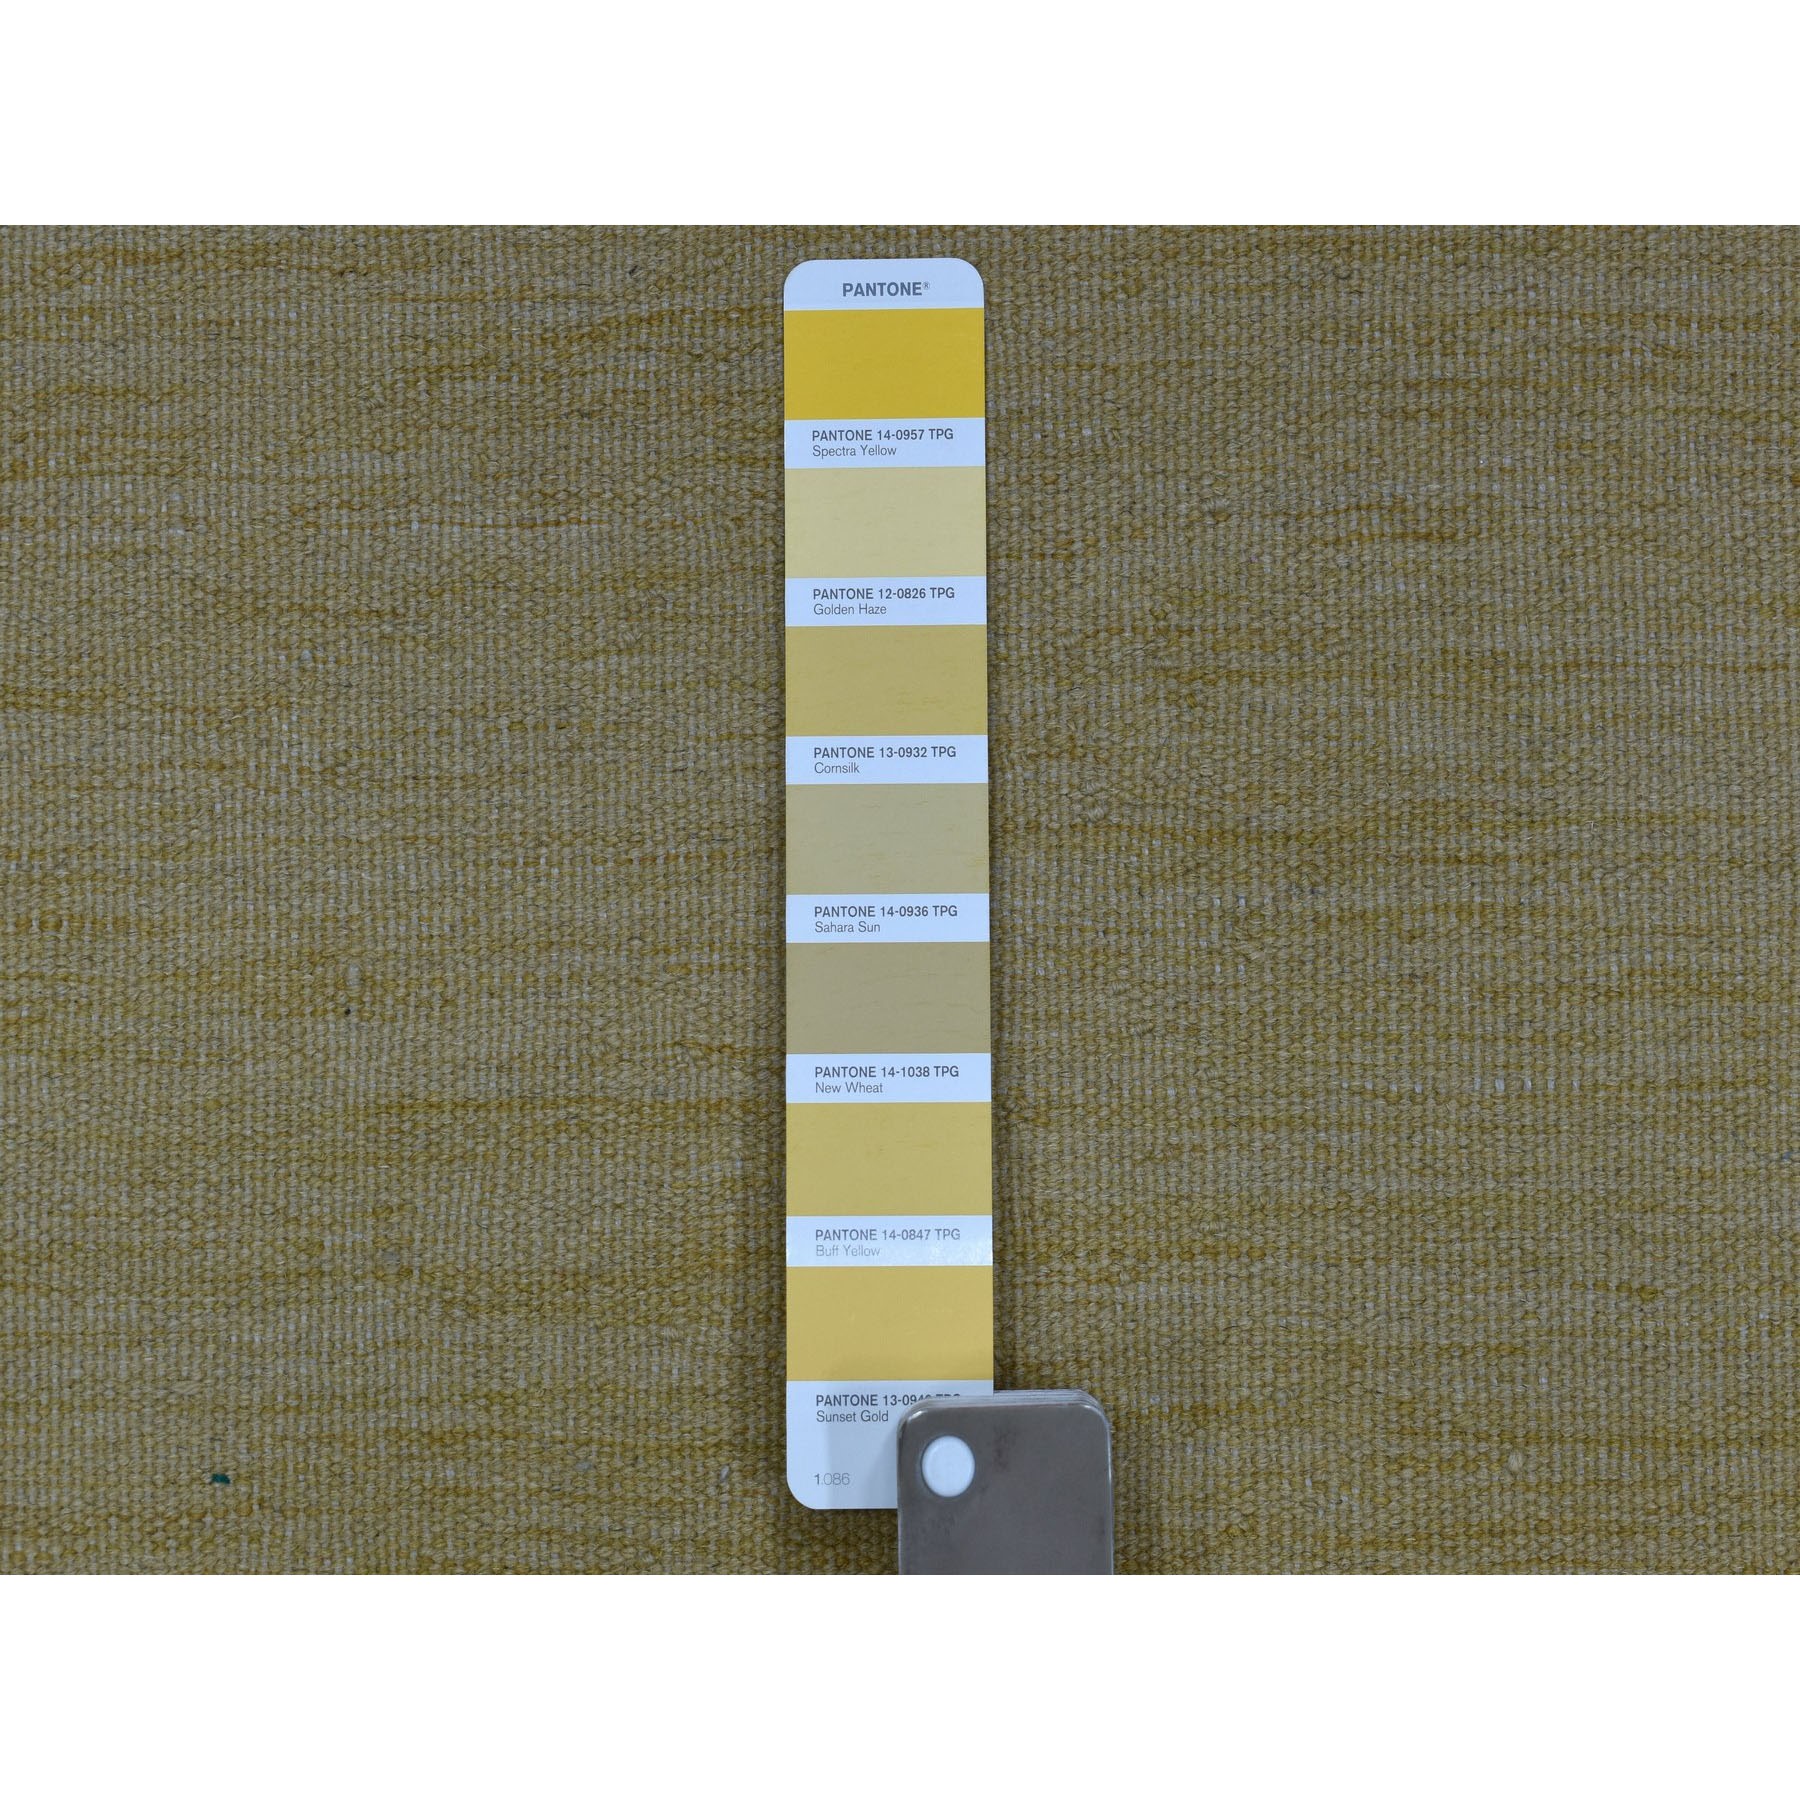 2-6 x6-7  Yellow Shades Flat Weave Kilim Pure Wool Hand Woven Runner Oriental Rug 